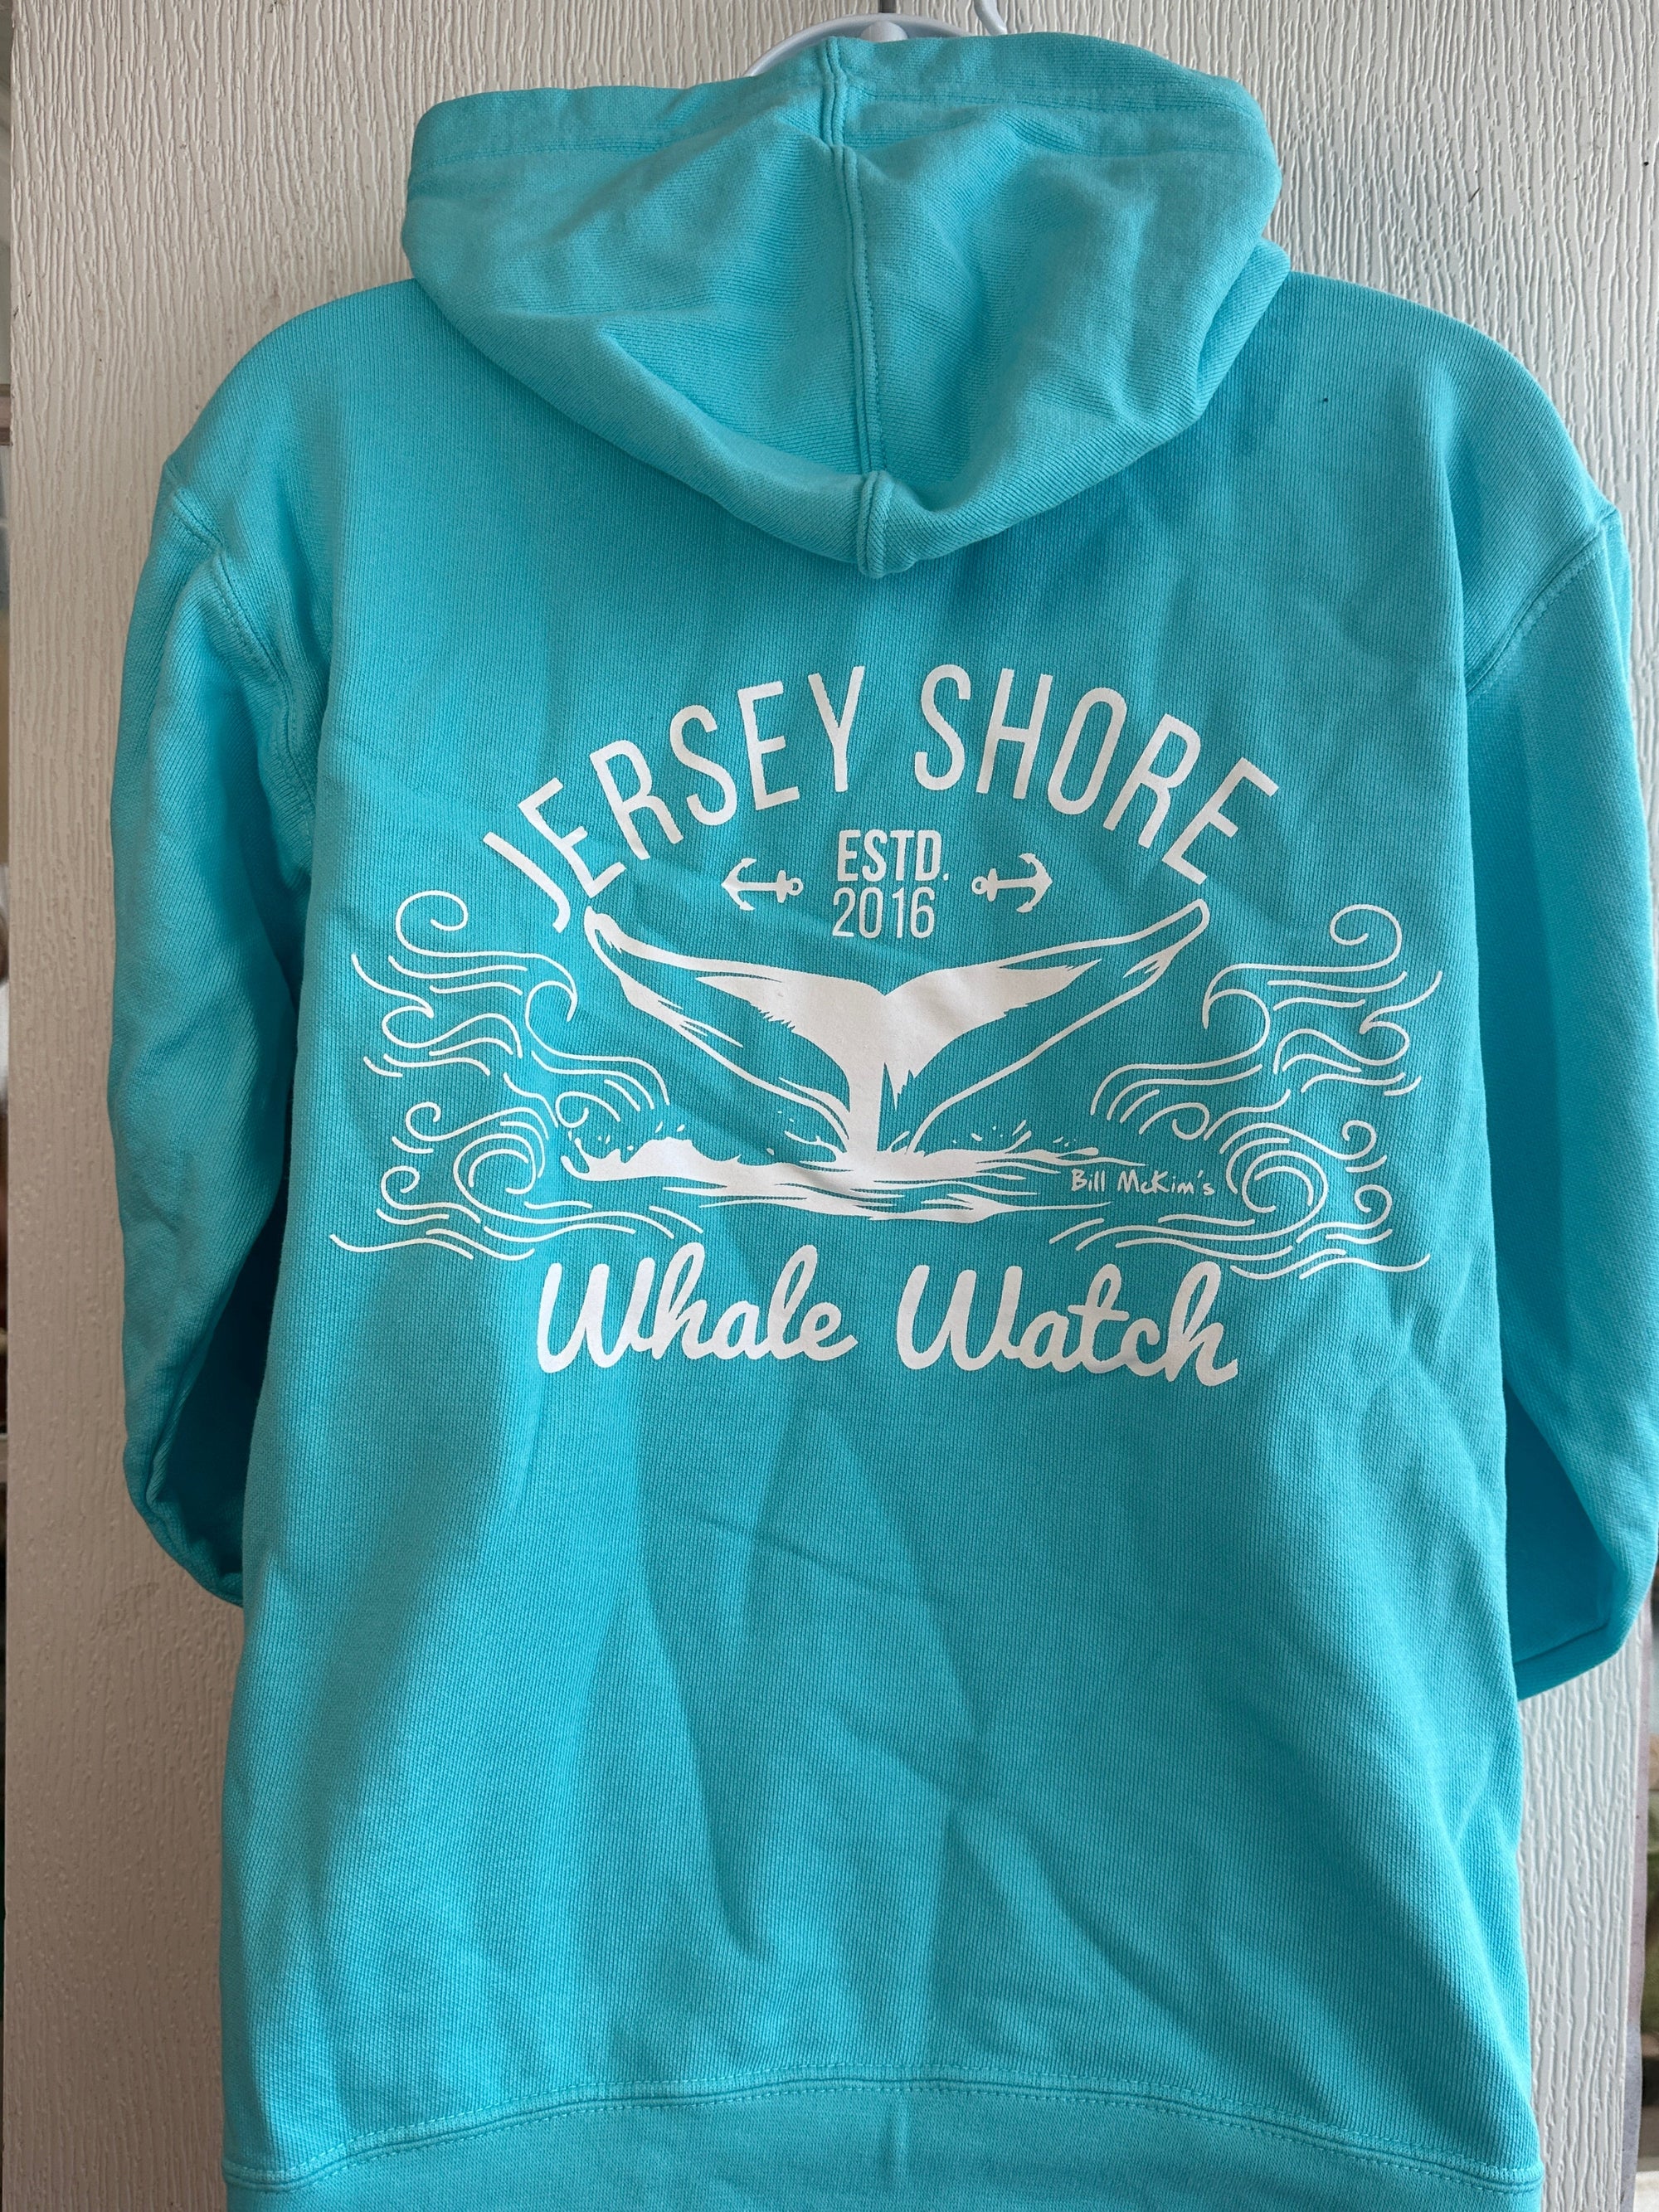 Est. 2016 Design Jersey Shore Whale Watch Heavyweight Sweatshirt printed both sides Bill McKim Photography Youth Large Blueberry 